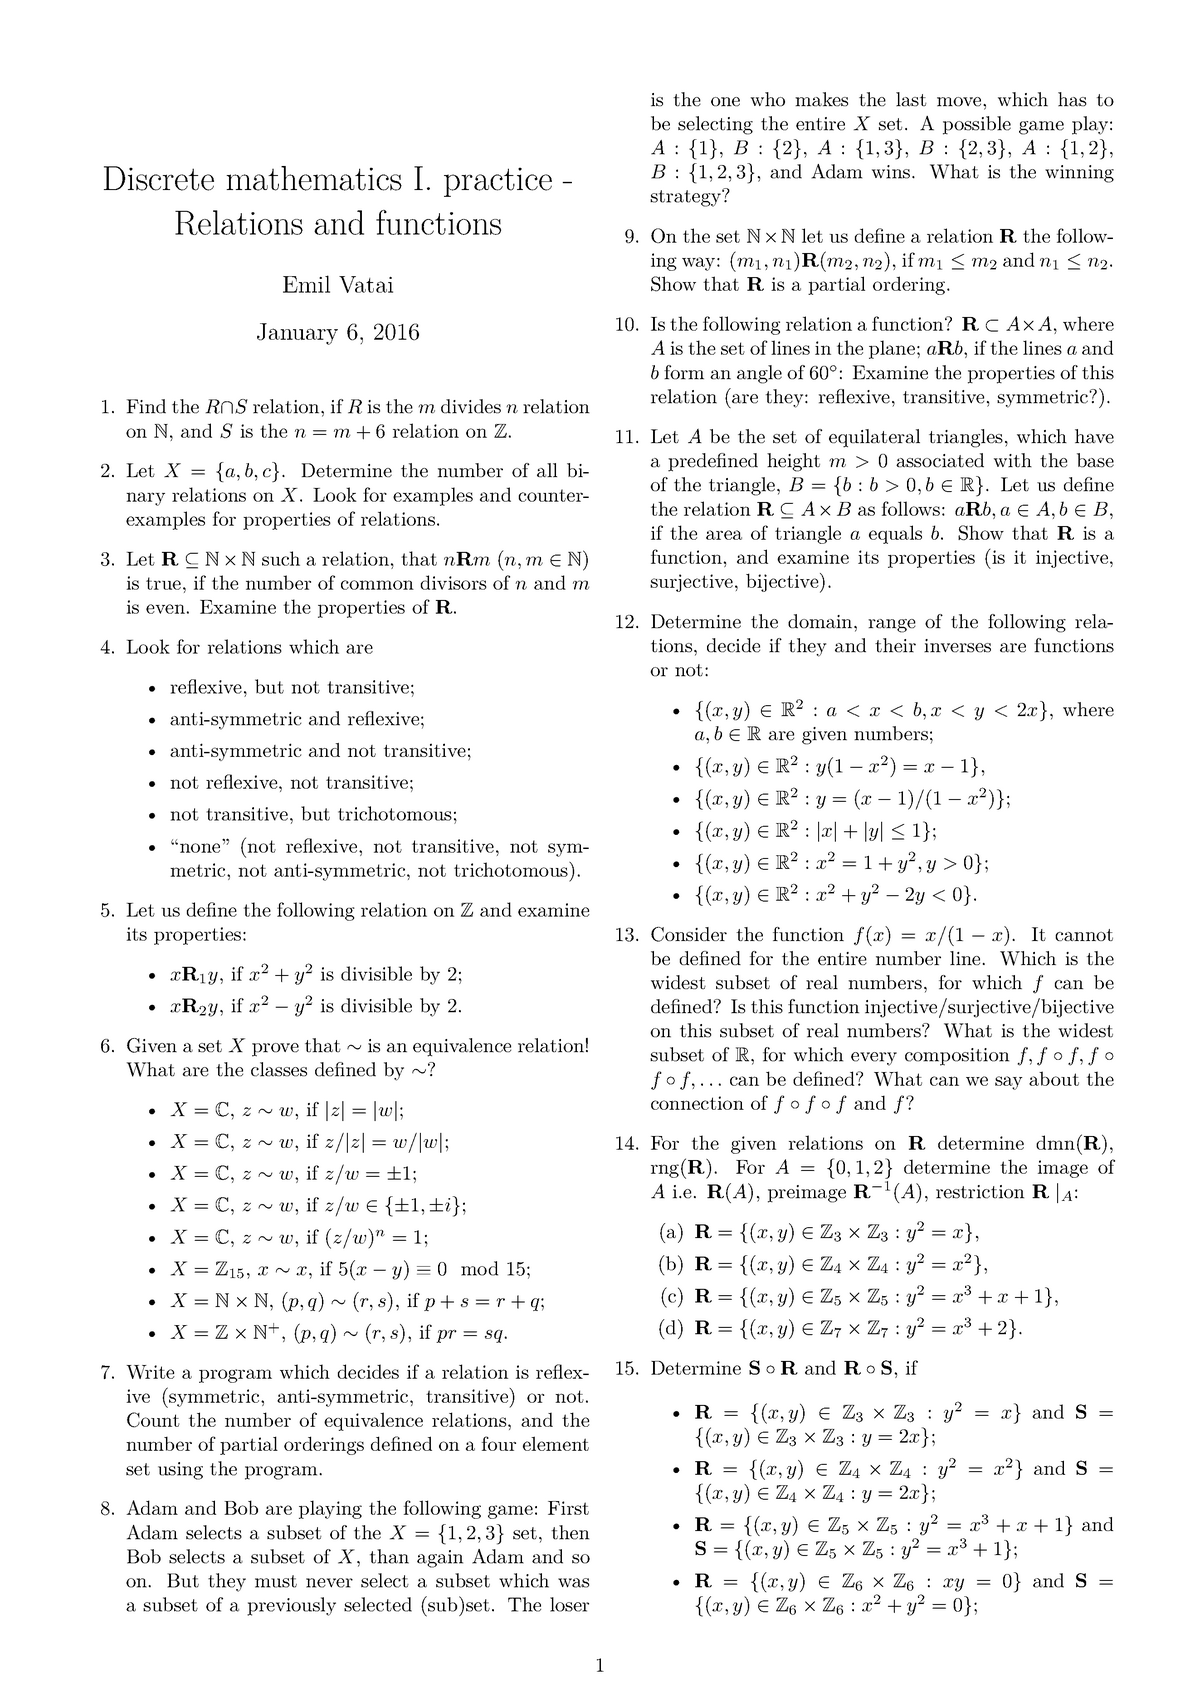 P3 Rel Fn Practical Exercises In Relations For Discrete Math Studocu